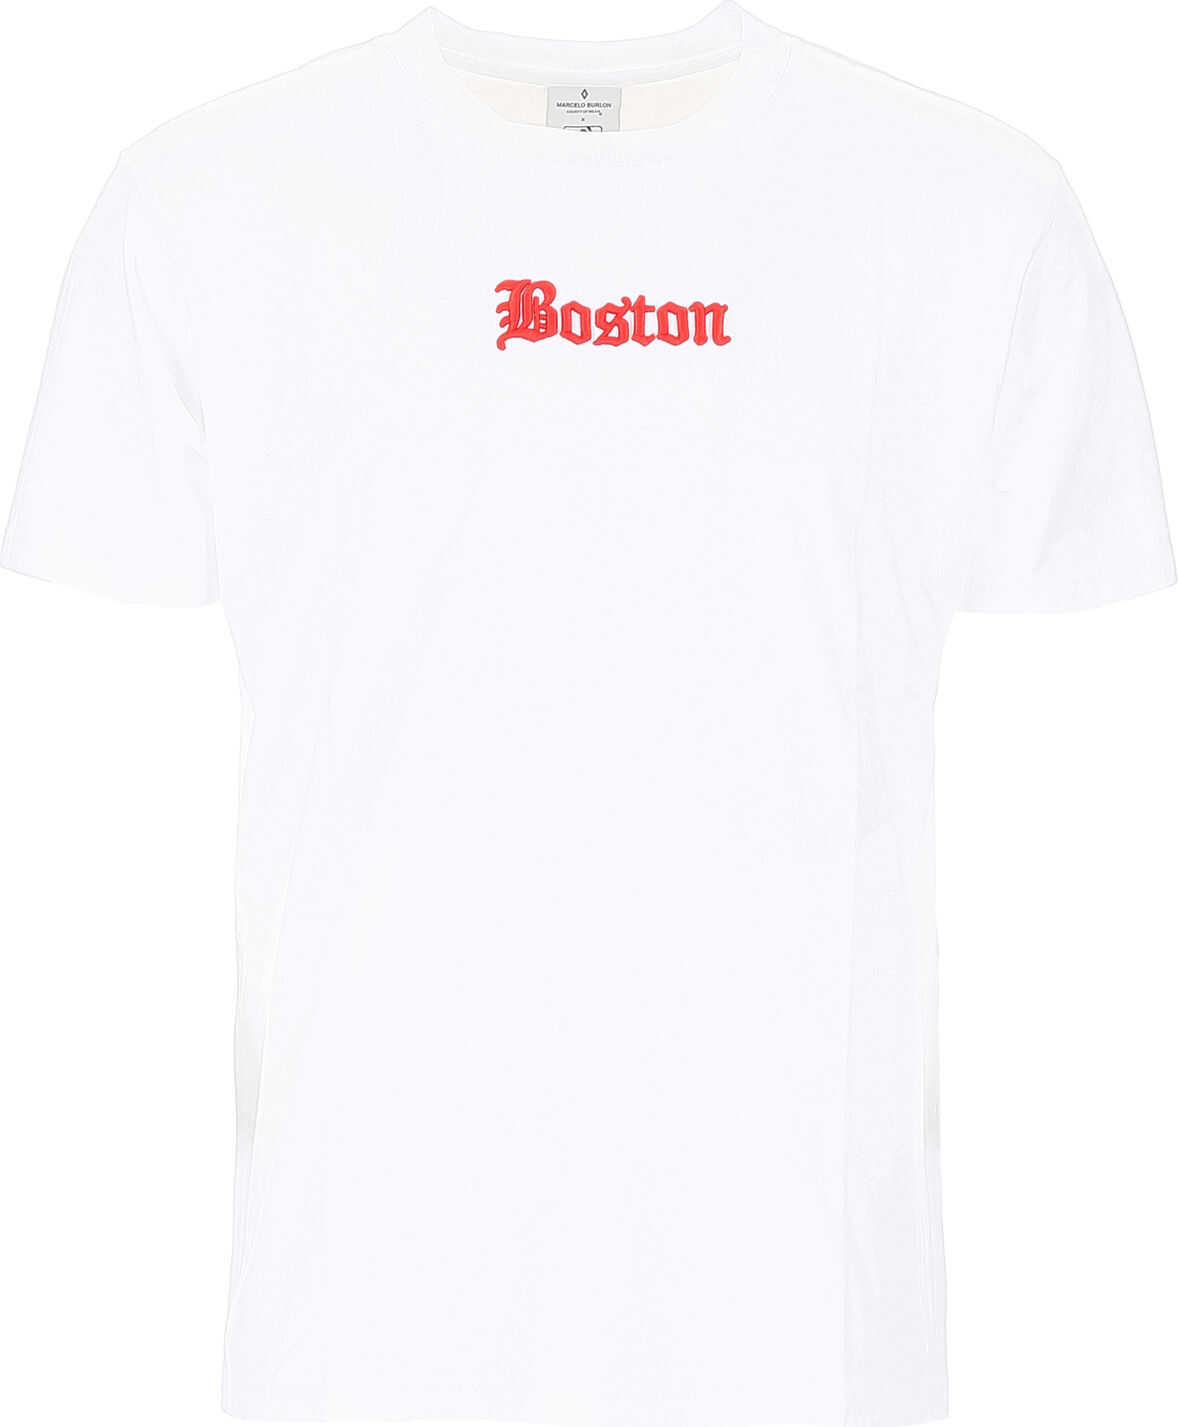 Marcelo Burlon Boston Red Sox T-Shirt WHITE RED